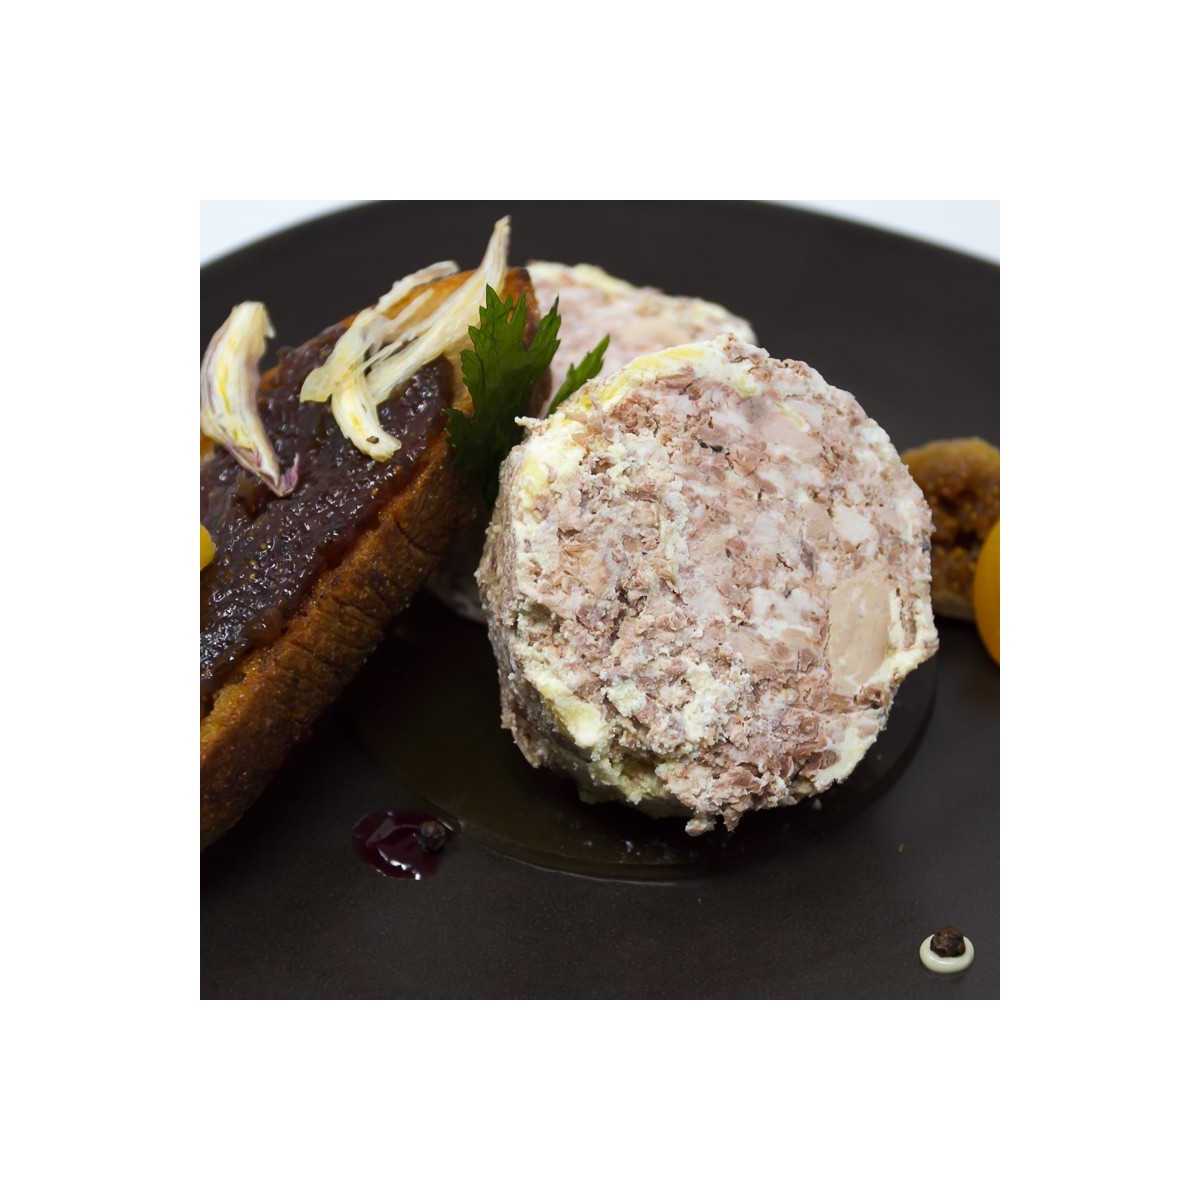 Pâté au foie gras de canard (20%)